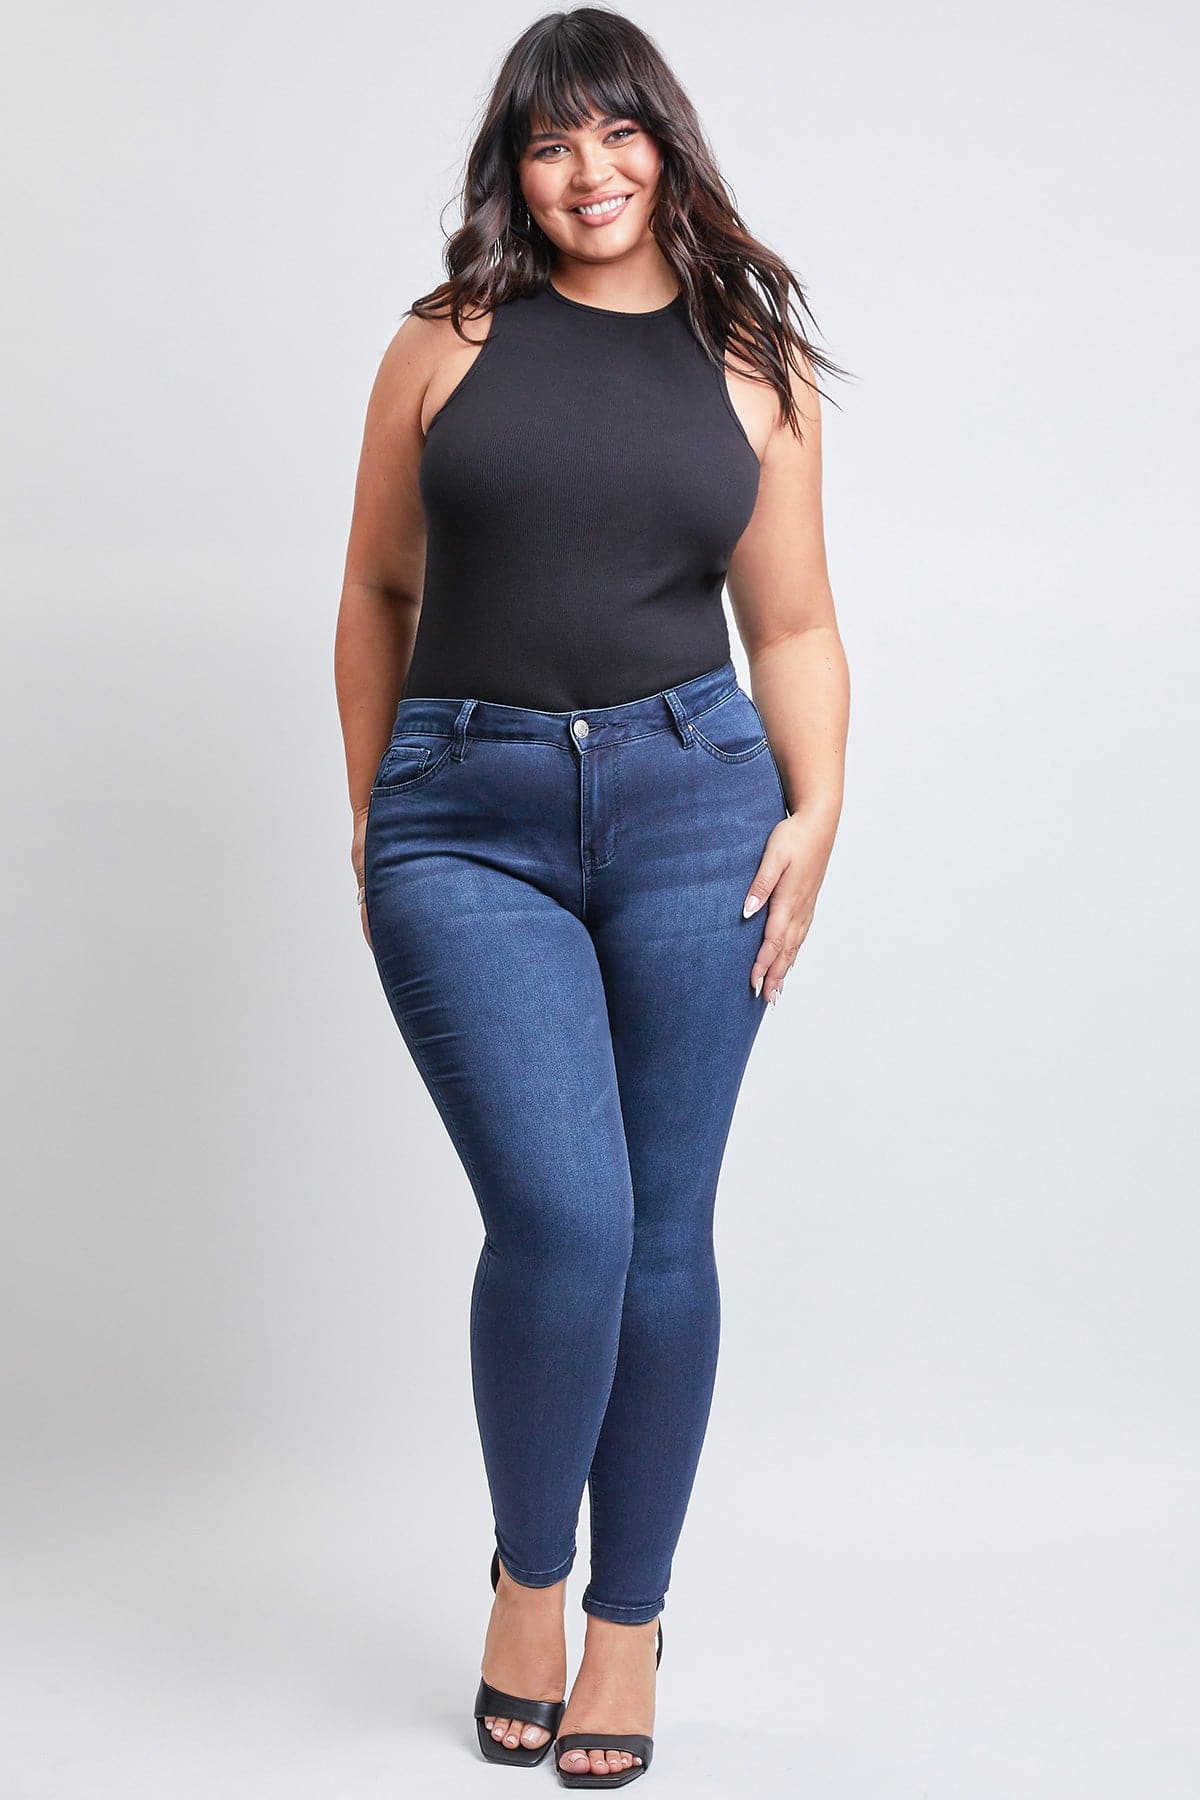 Plus Size Women's Essential HyperDenim Skinny Jeans